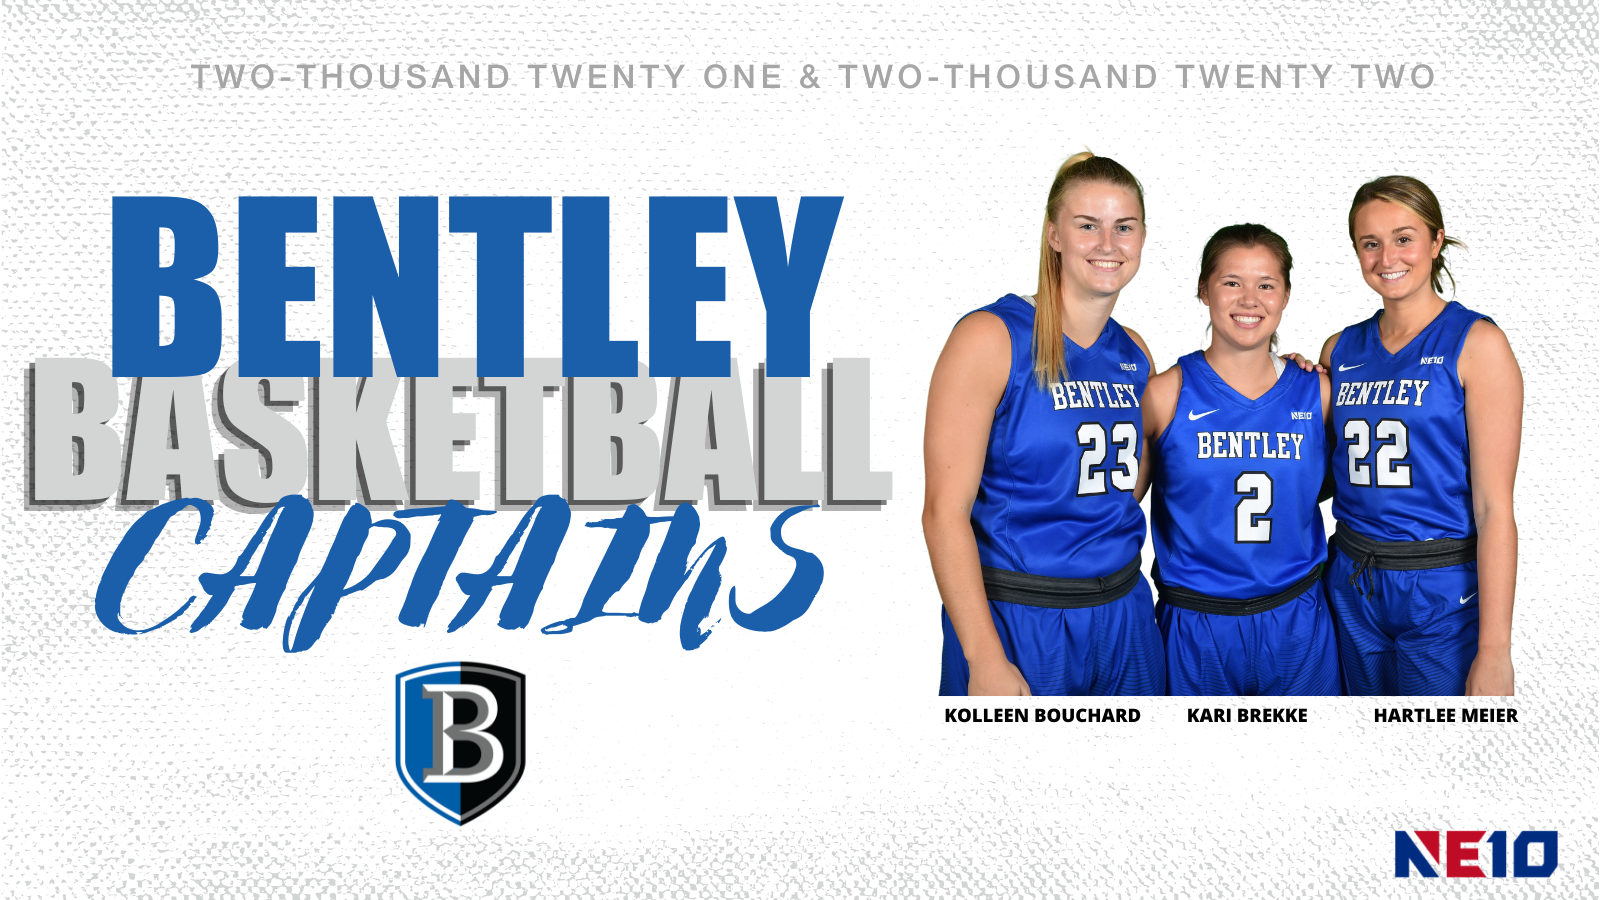 Bentley's women's basketball captains